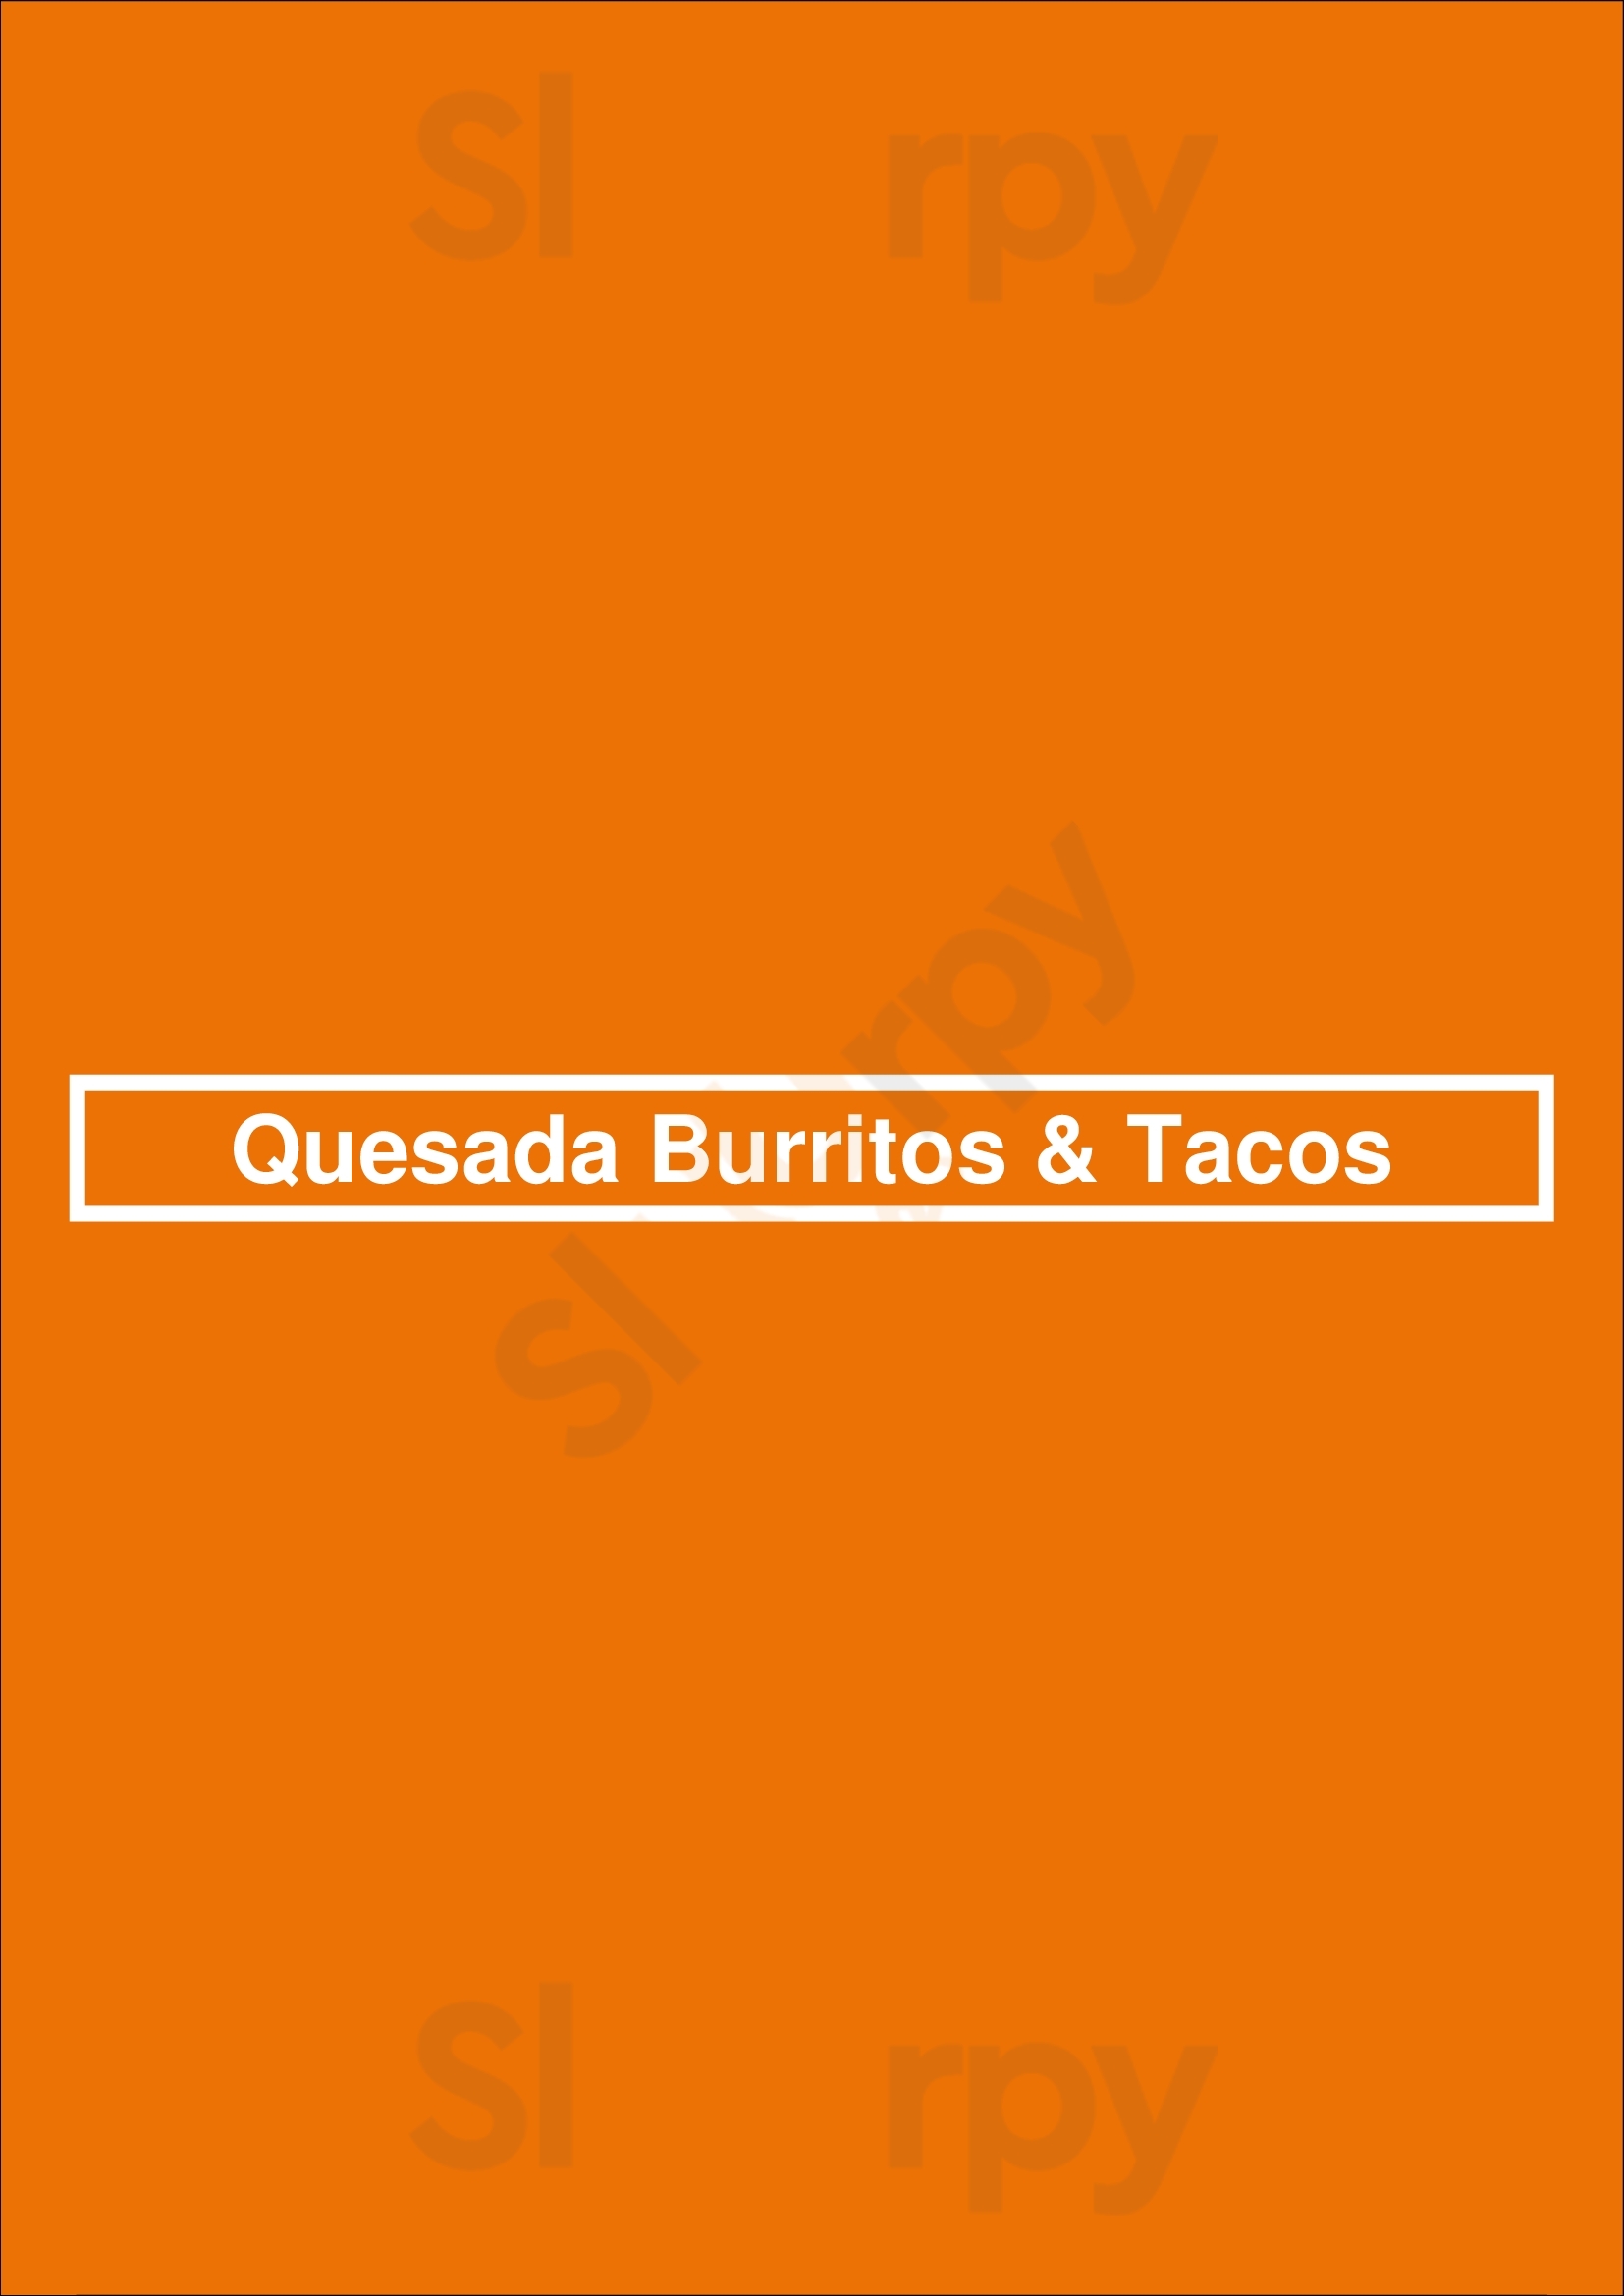 Quesada Burritos & Tacos London Menu - 1